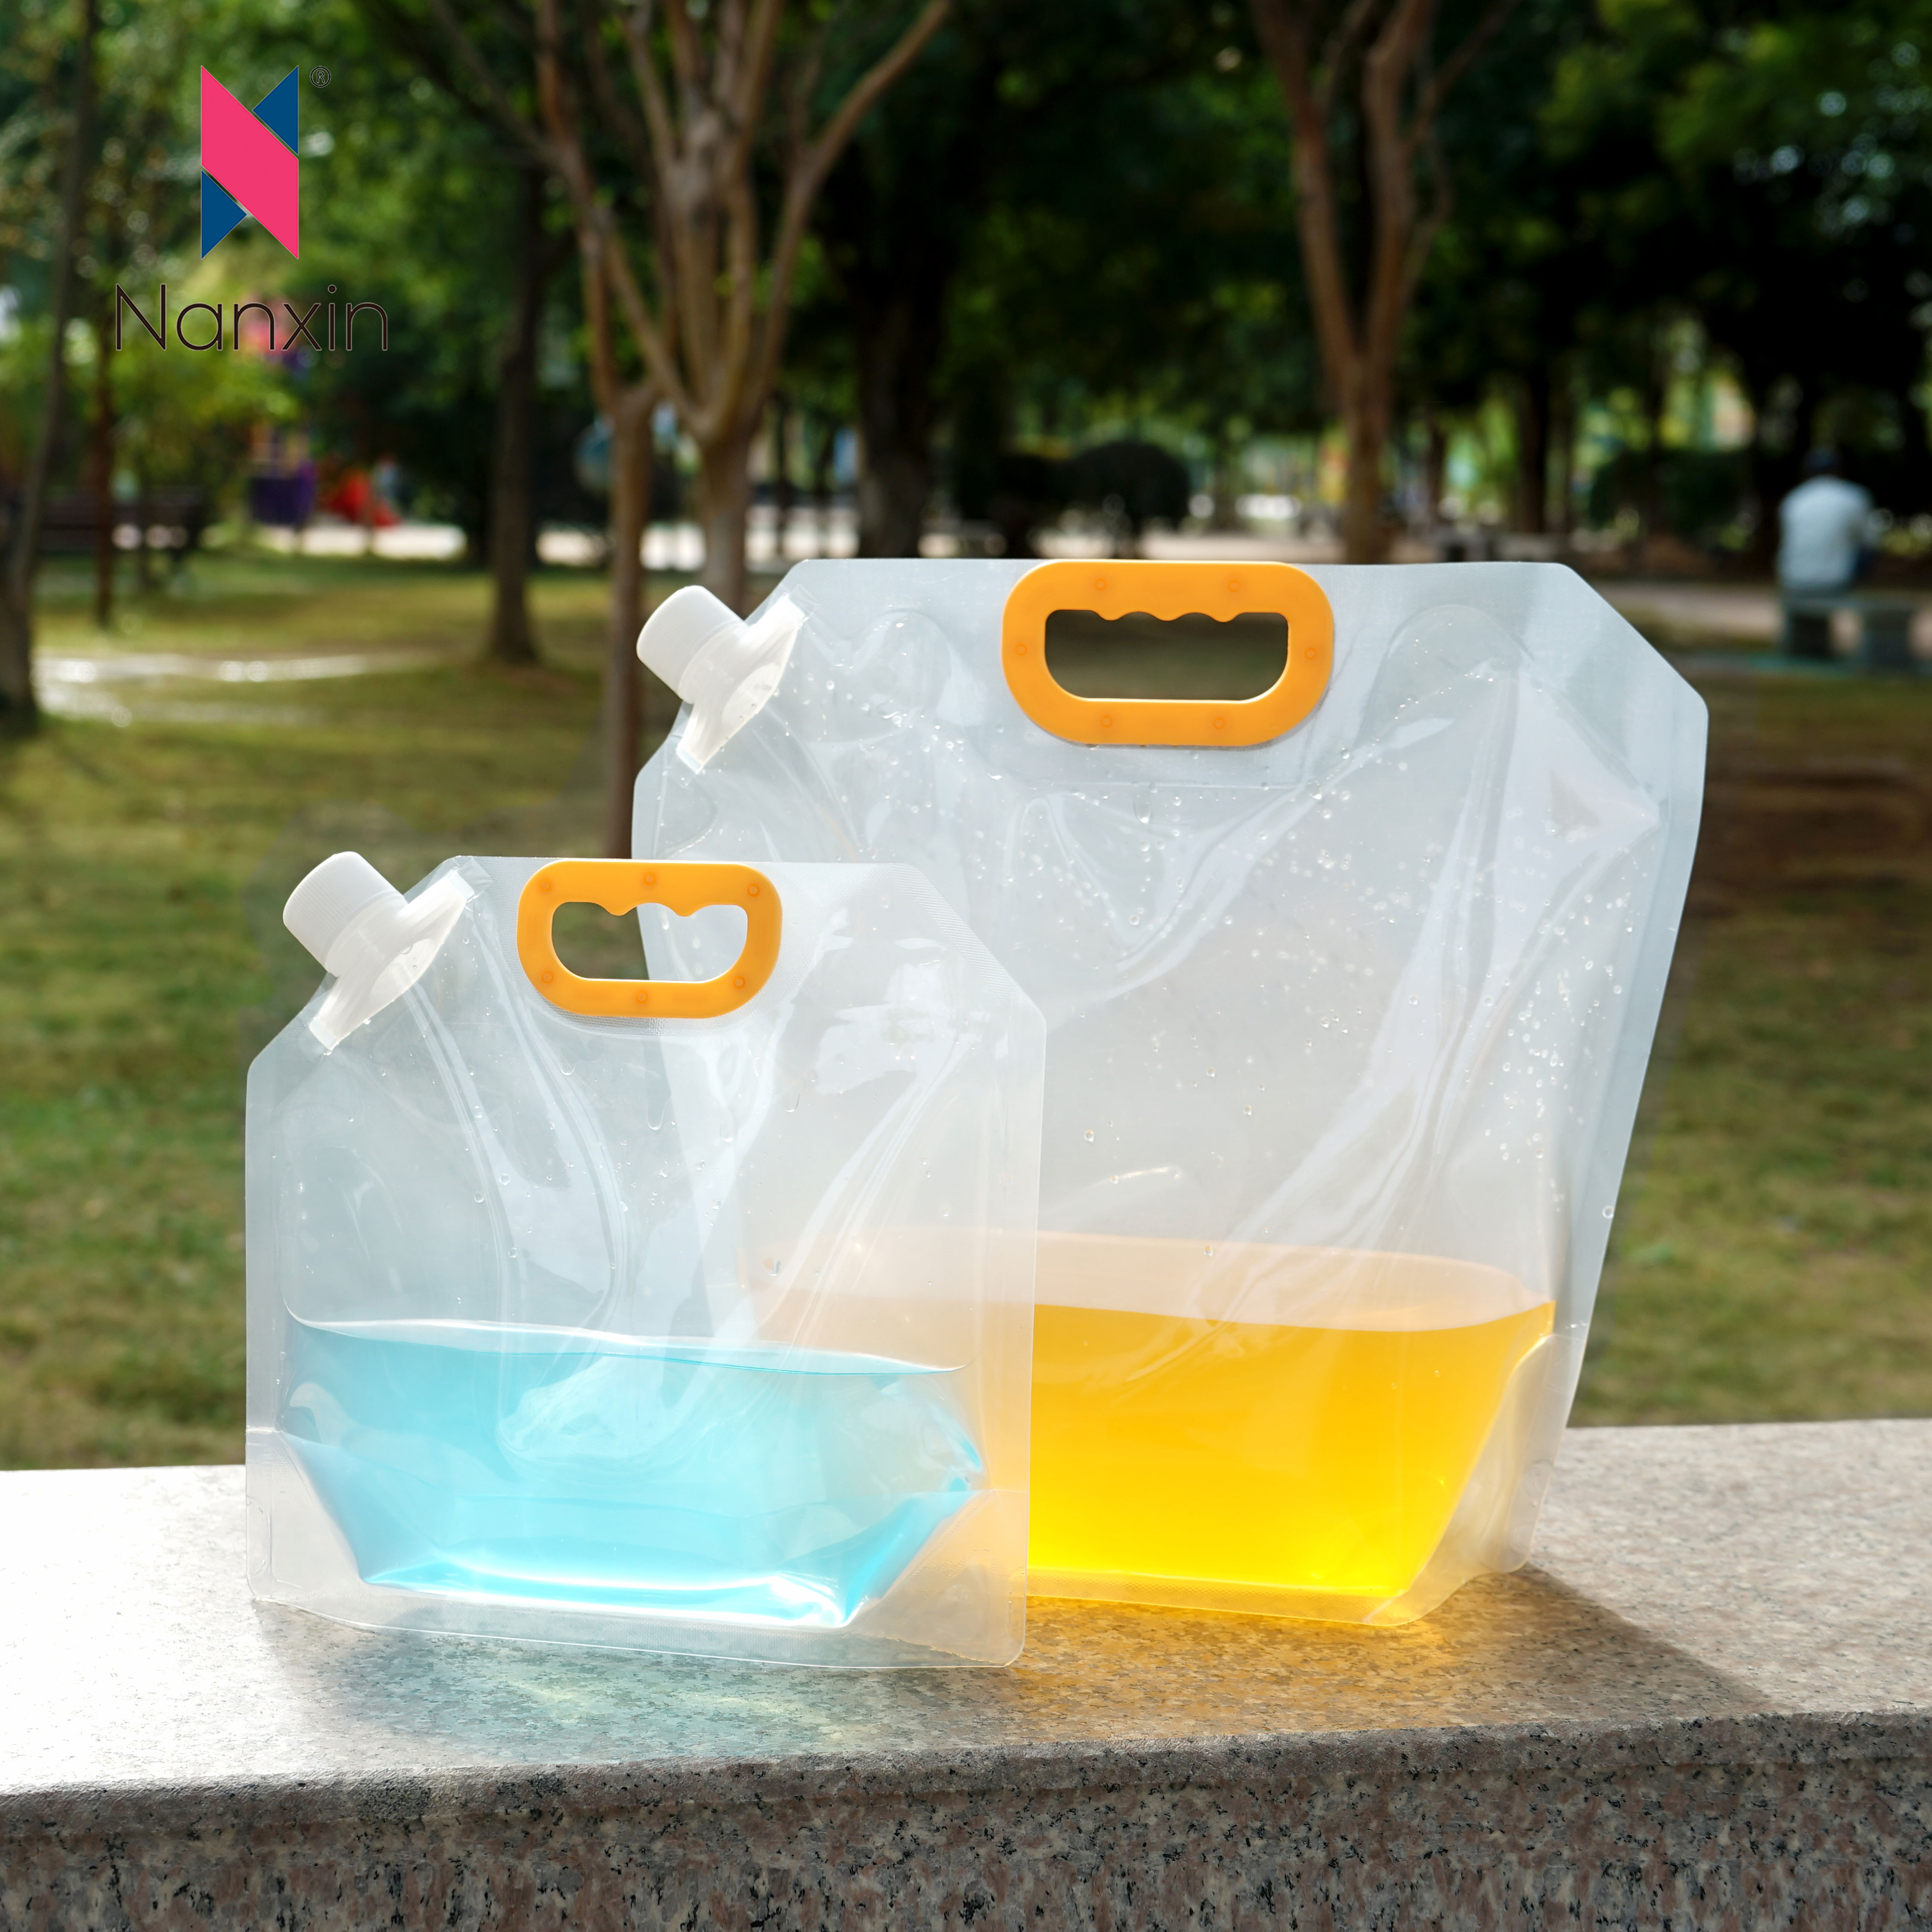 Wholesale Portable Gallon Custom Nozzle Laundry Detergent Liquid Drink Pouch Water Container Plastic Beverage Bag with Spout